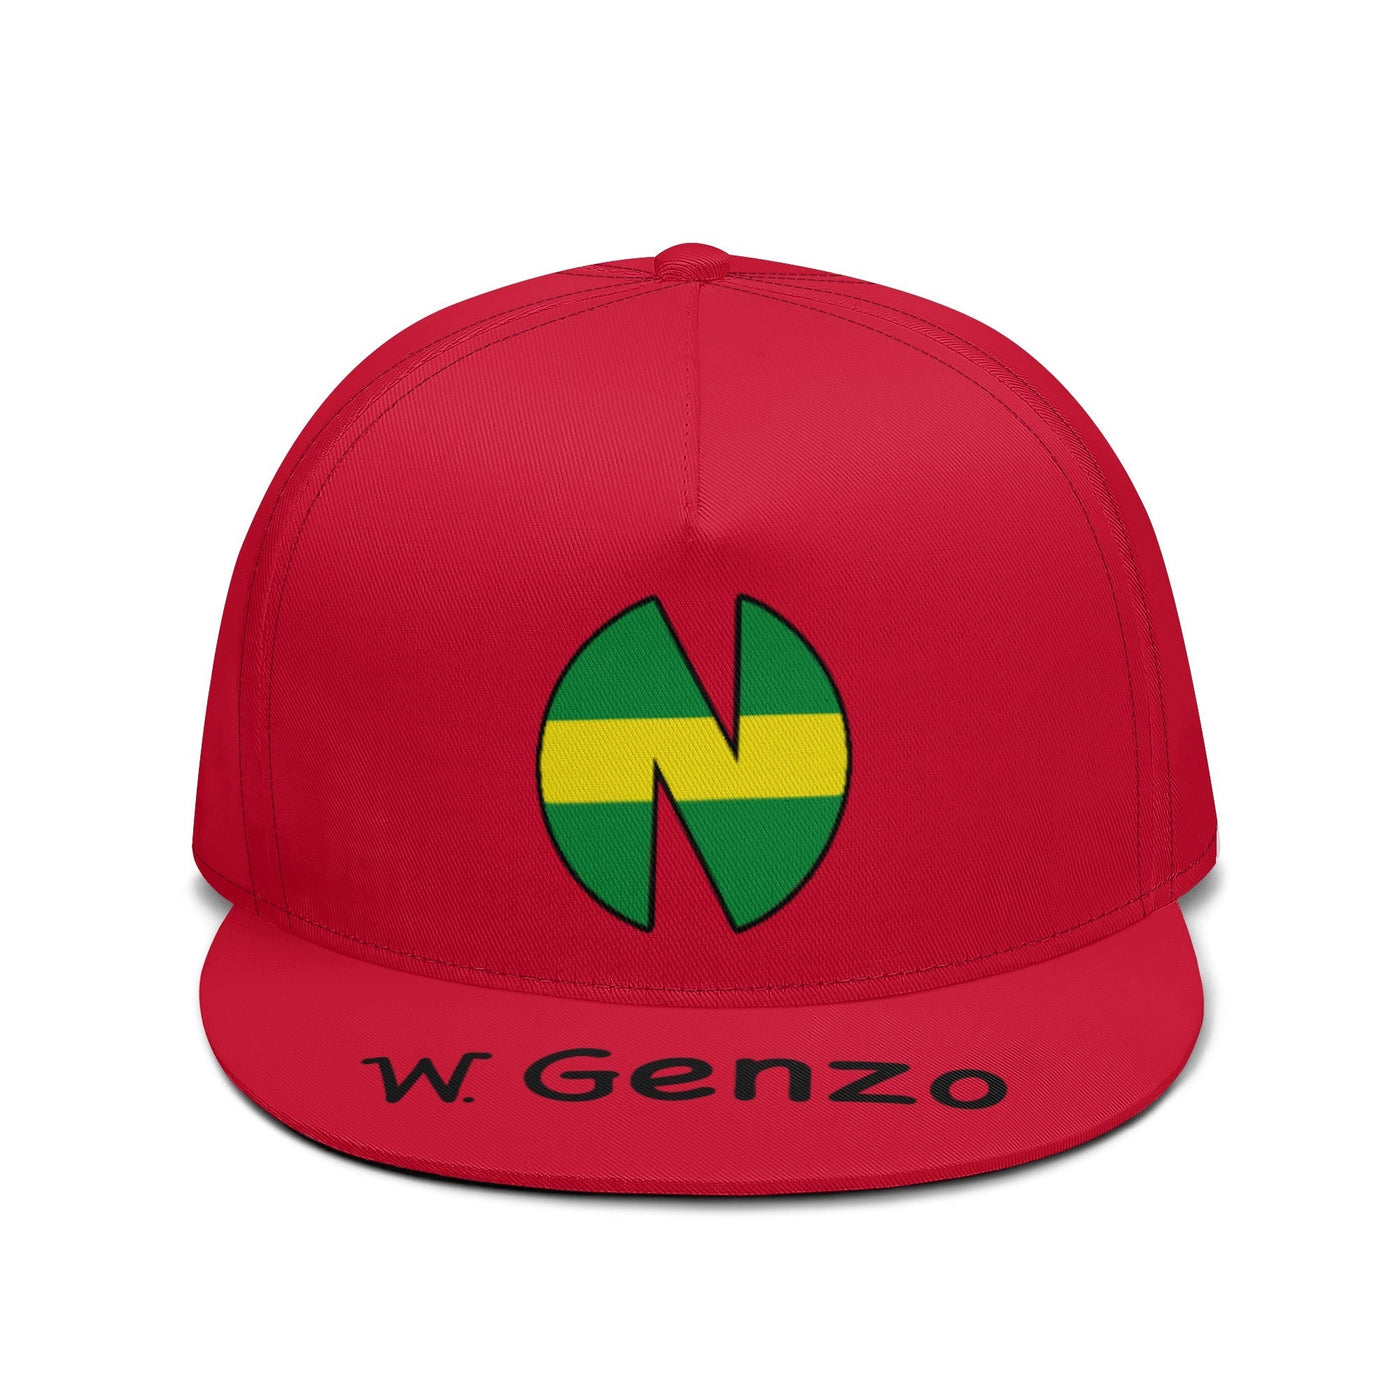 Benji Price / W. Genzo - Captain Tsubasa Goalkeeper | Cosplay Hat